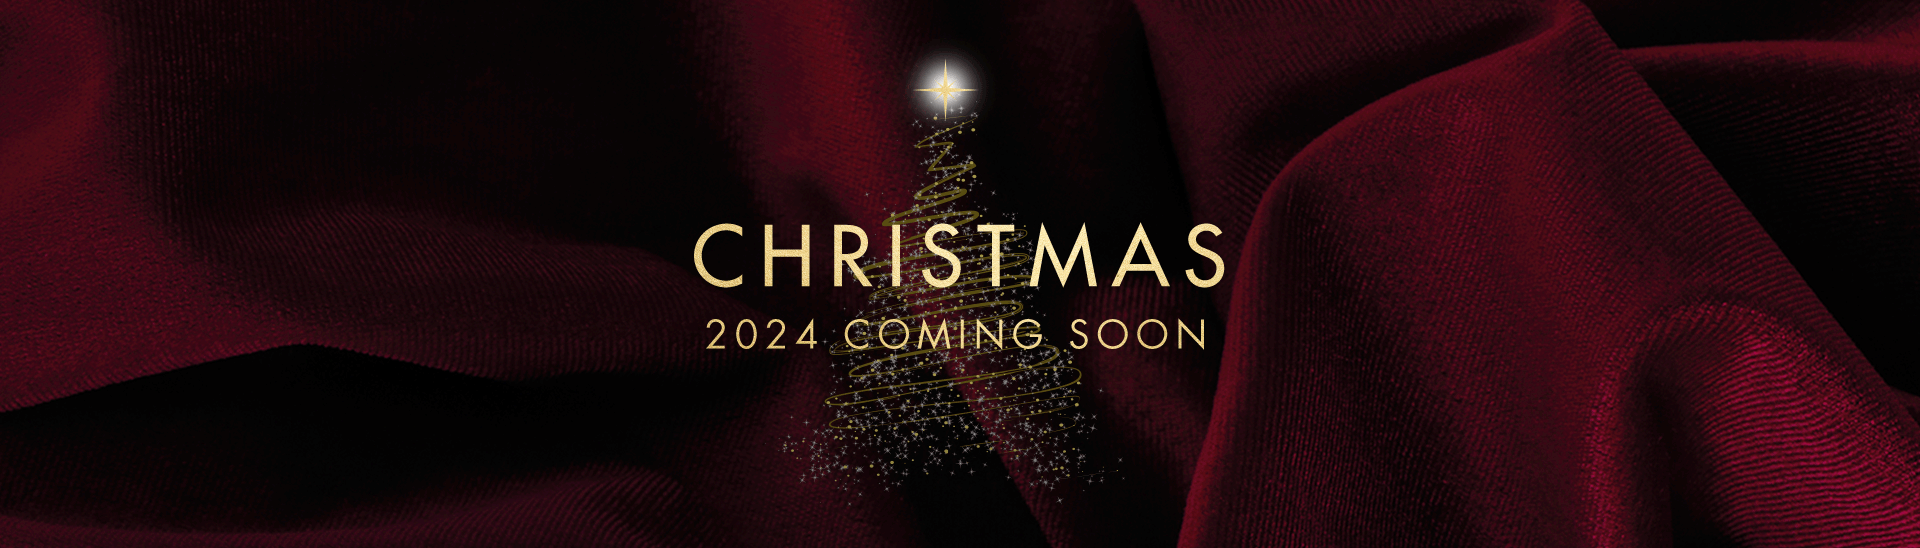 Christmas 2024 at Smethwick